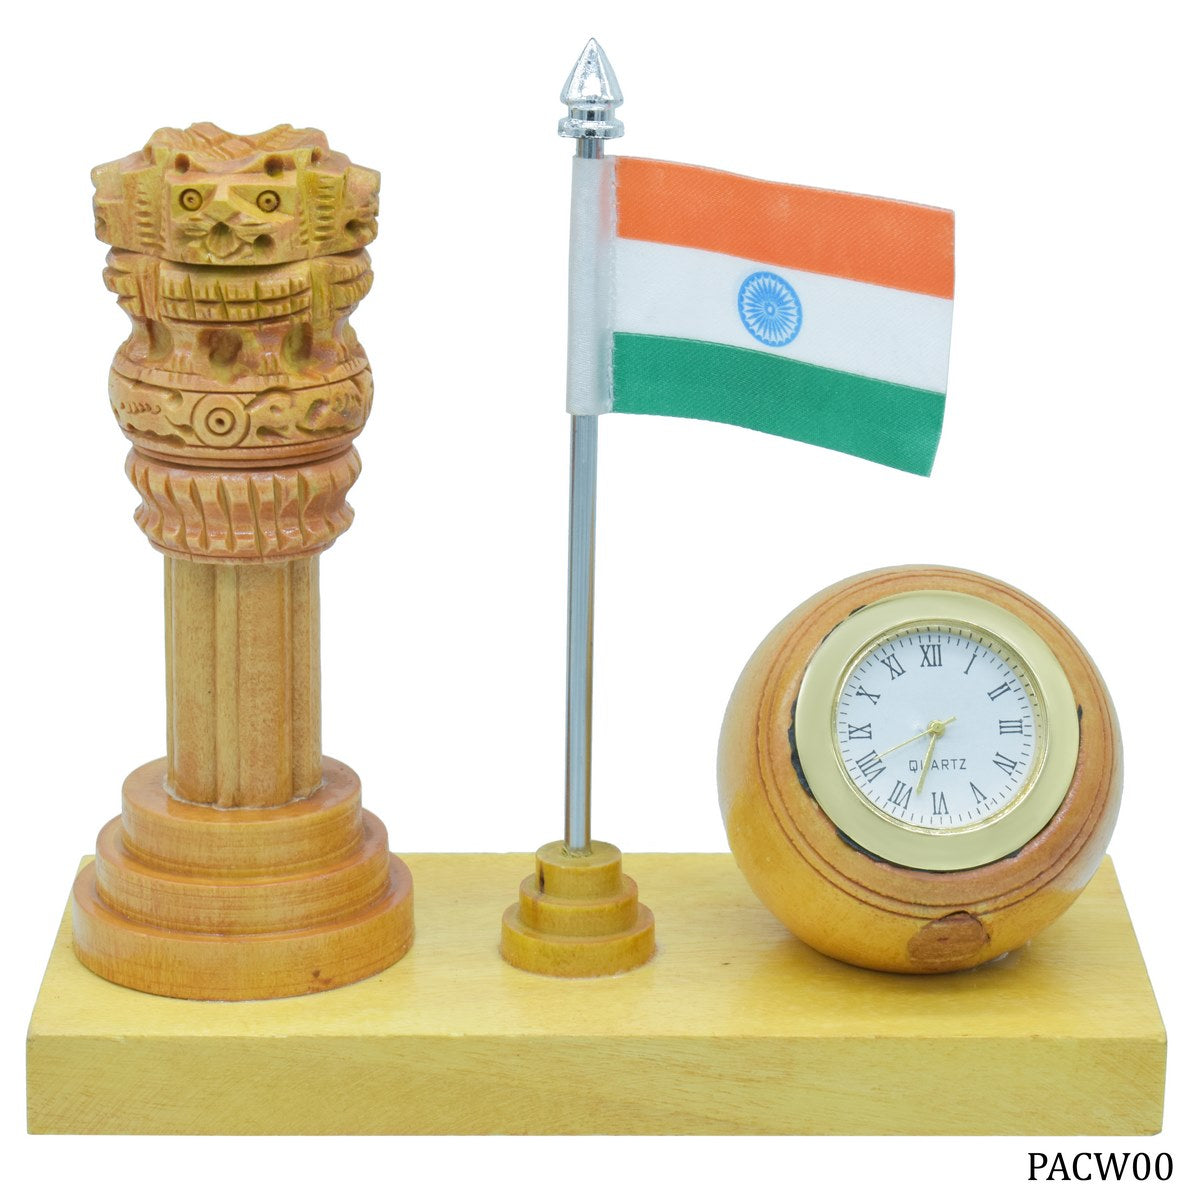 jags-mumbai Office Desk Stationery Pillar Ashoka Chakra With Watch And Flag